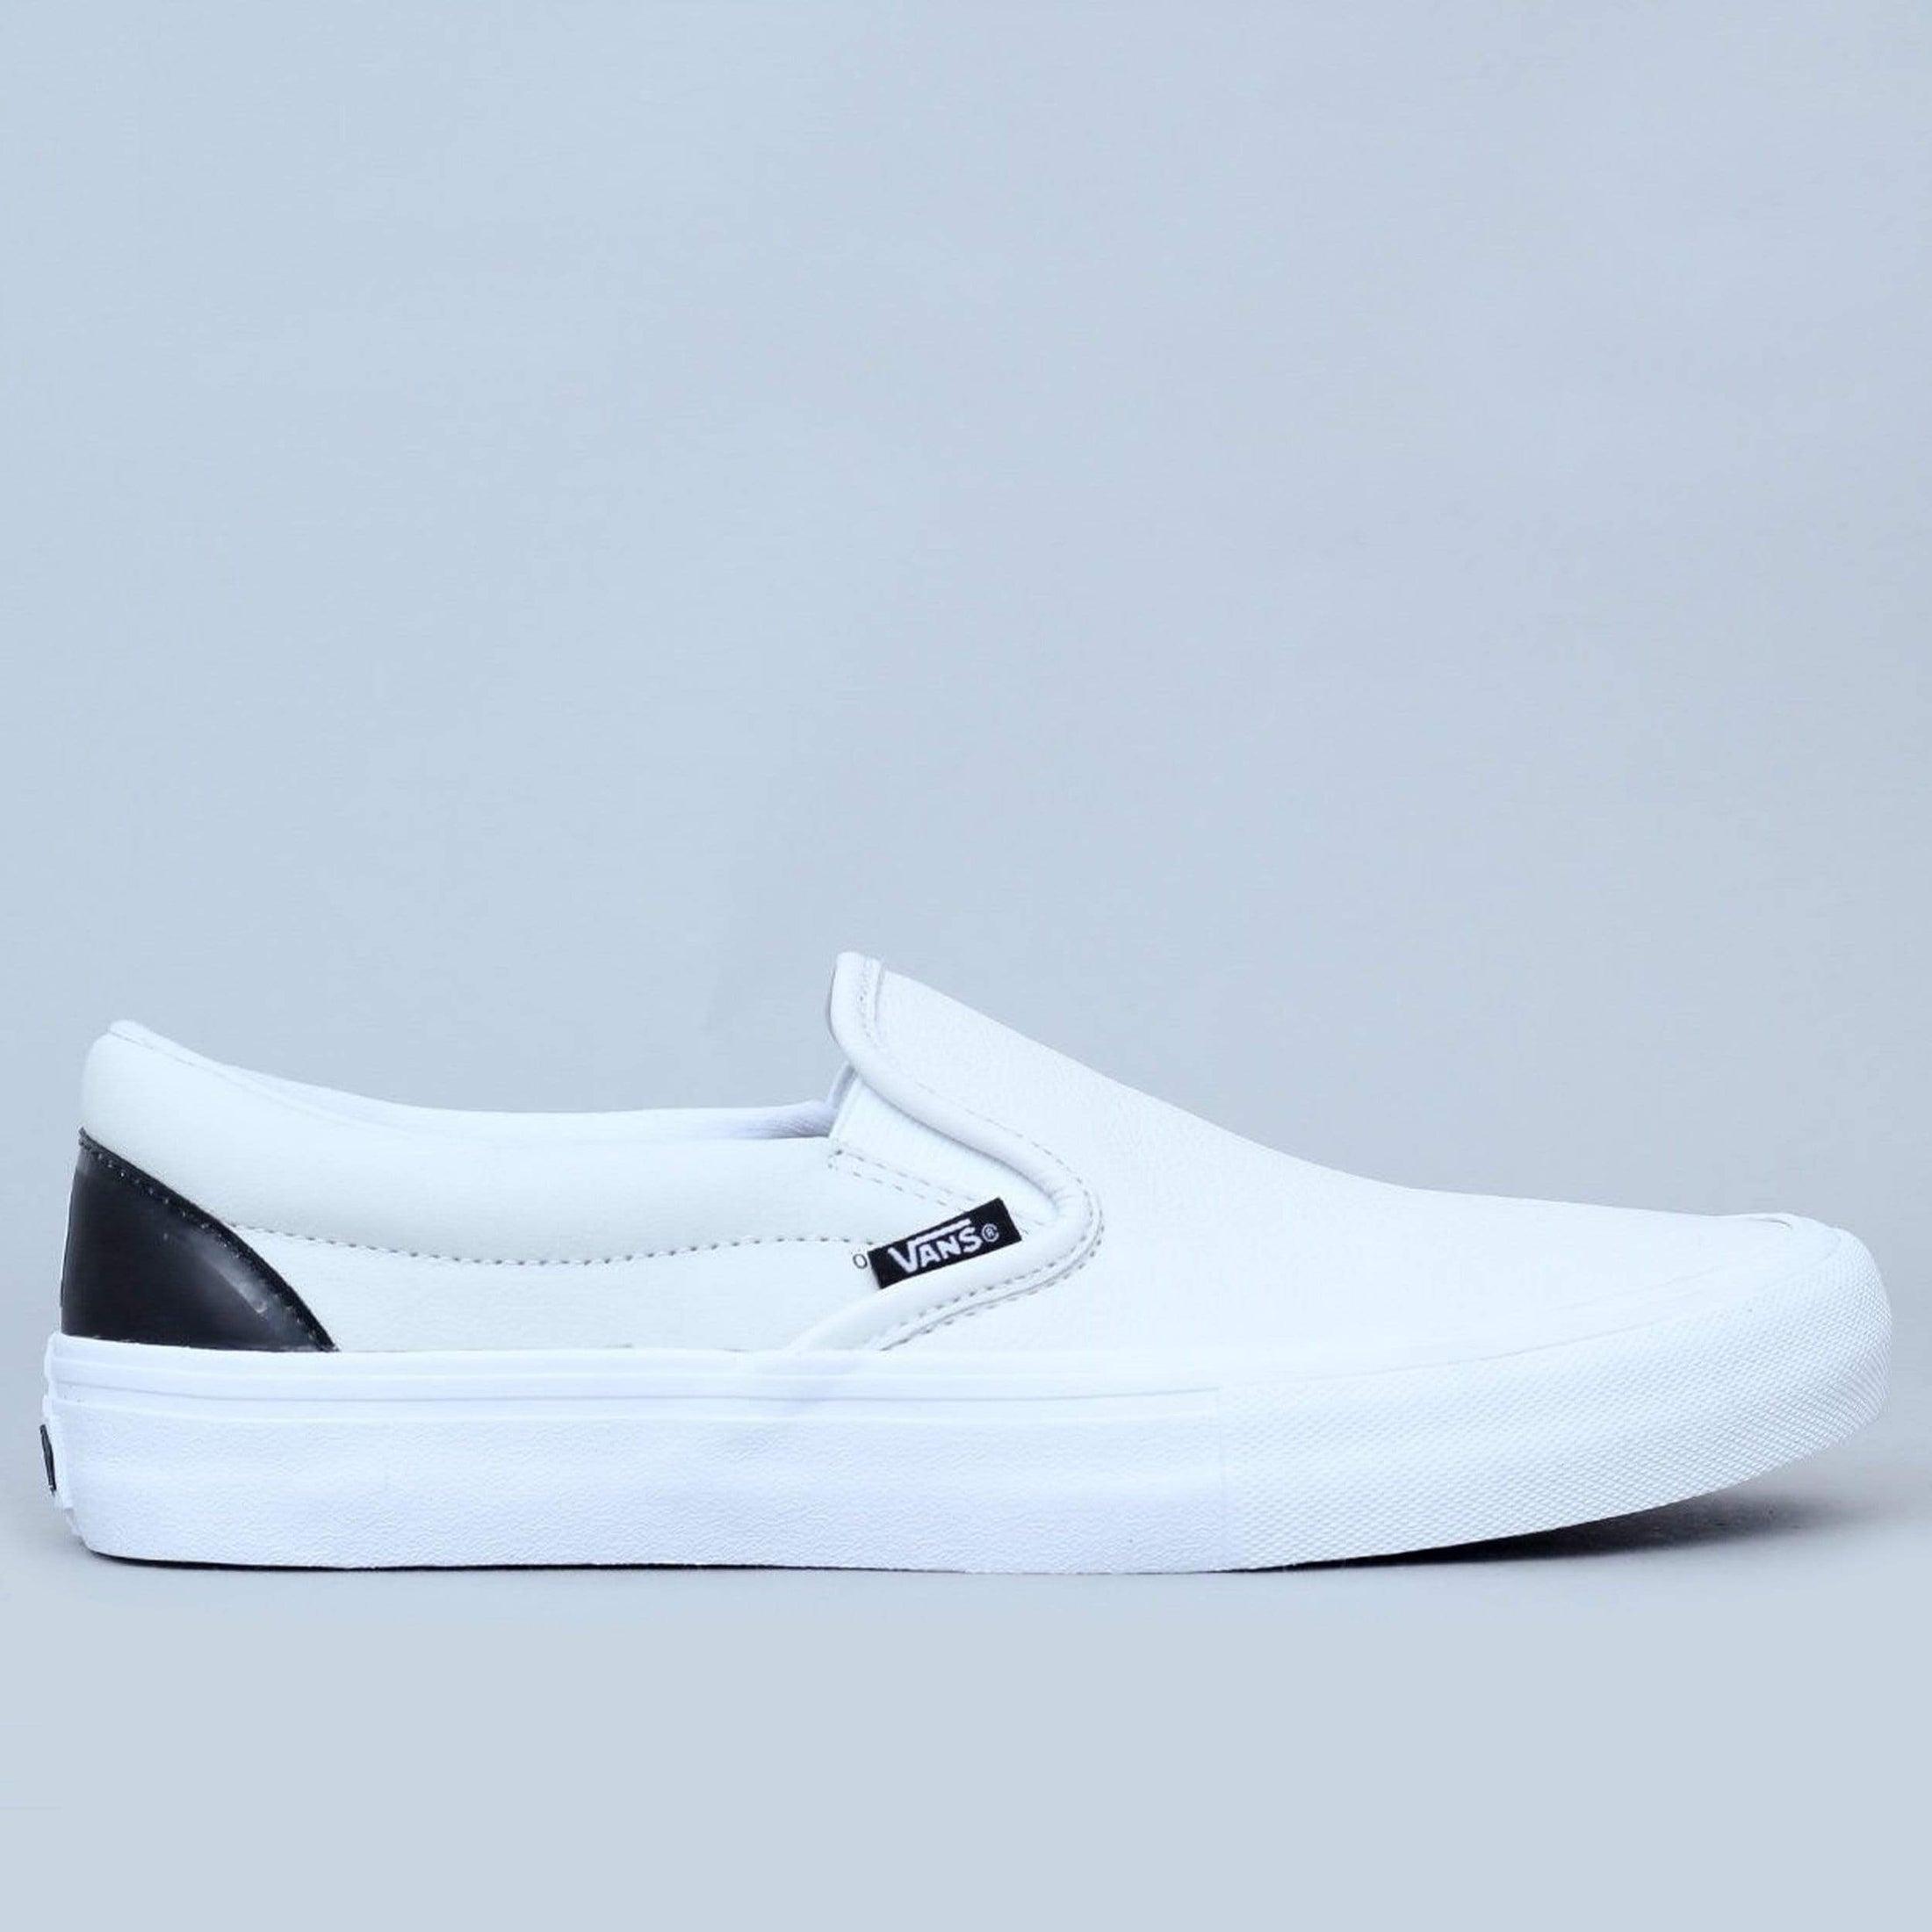 Vans X Octagon Slip on Pro Shoes True White / Black